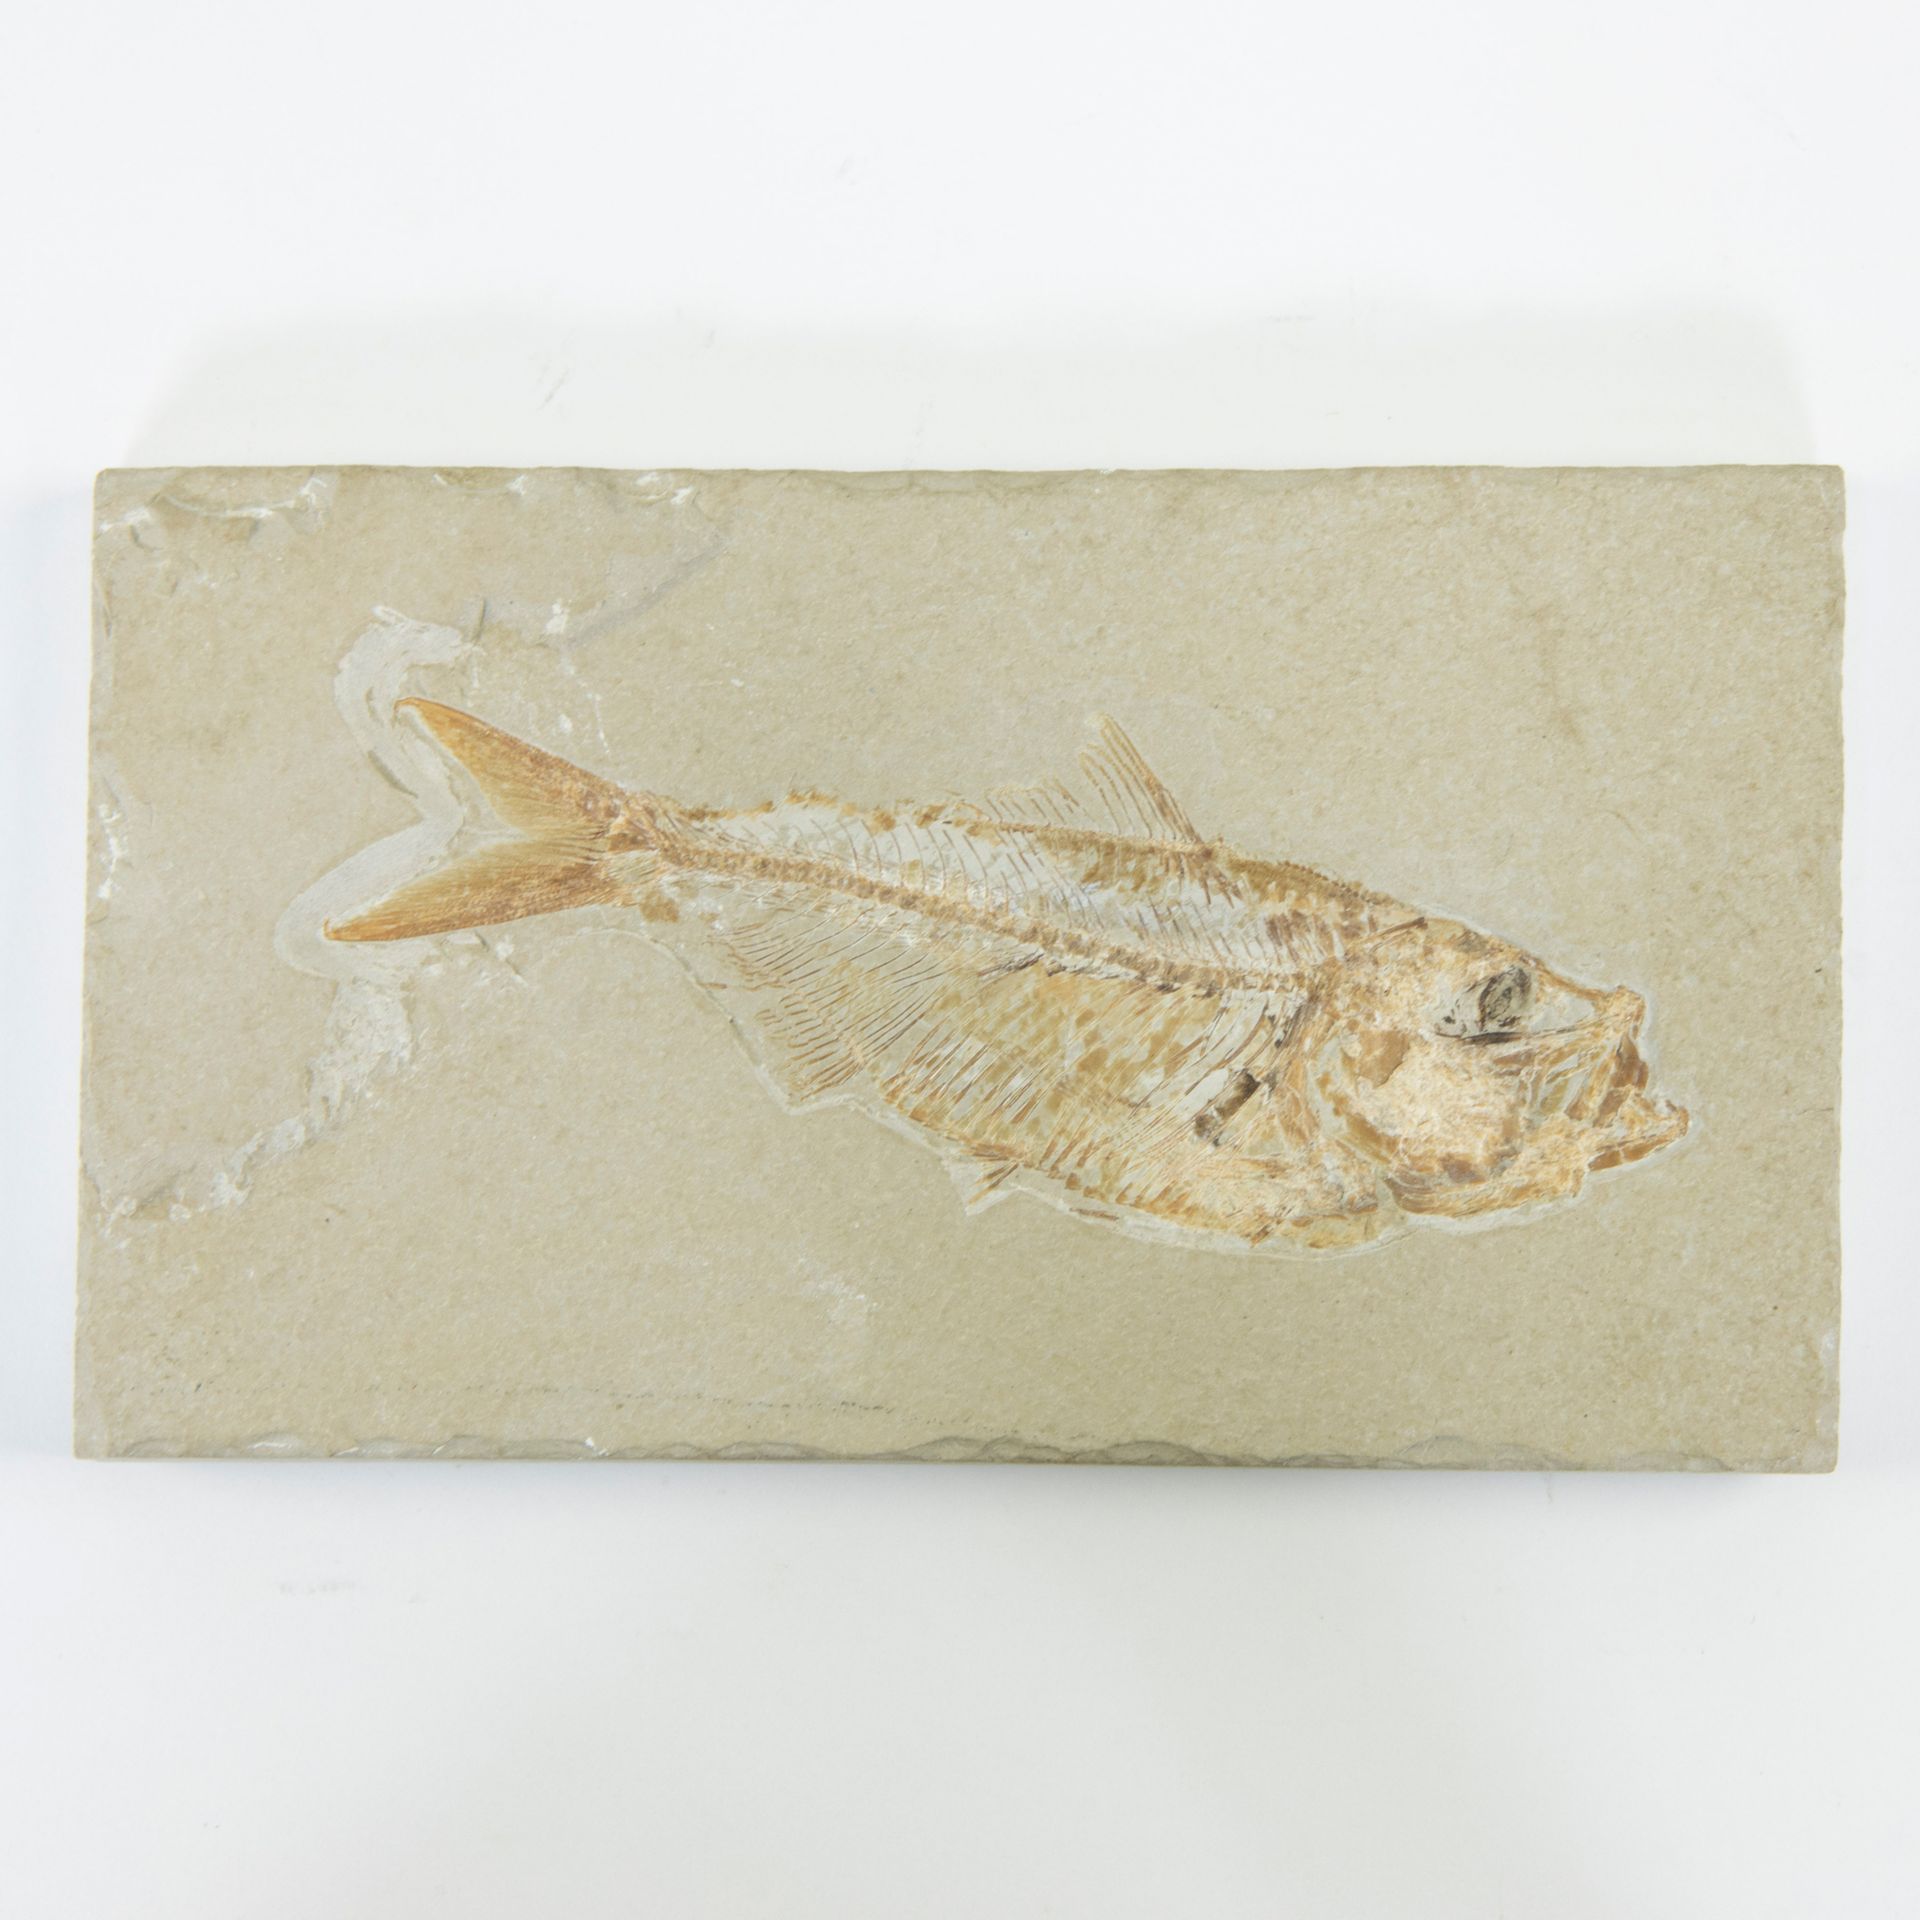 Null Fossiler Fisch, Scombroclupea macrophthalma, Oberkreide (90 milj j)
Fossiel&hellip;